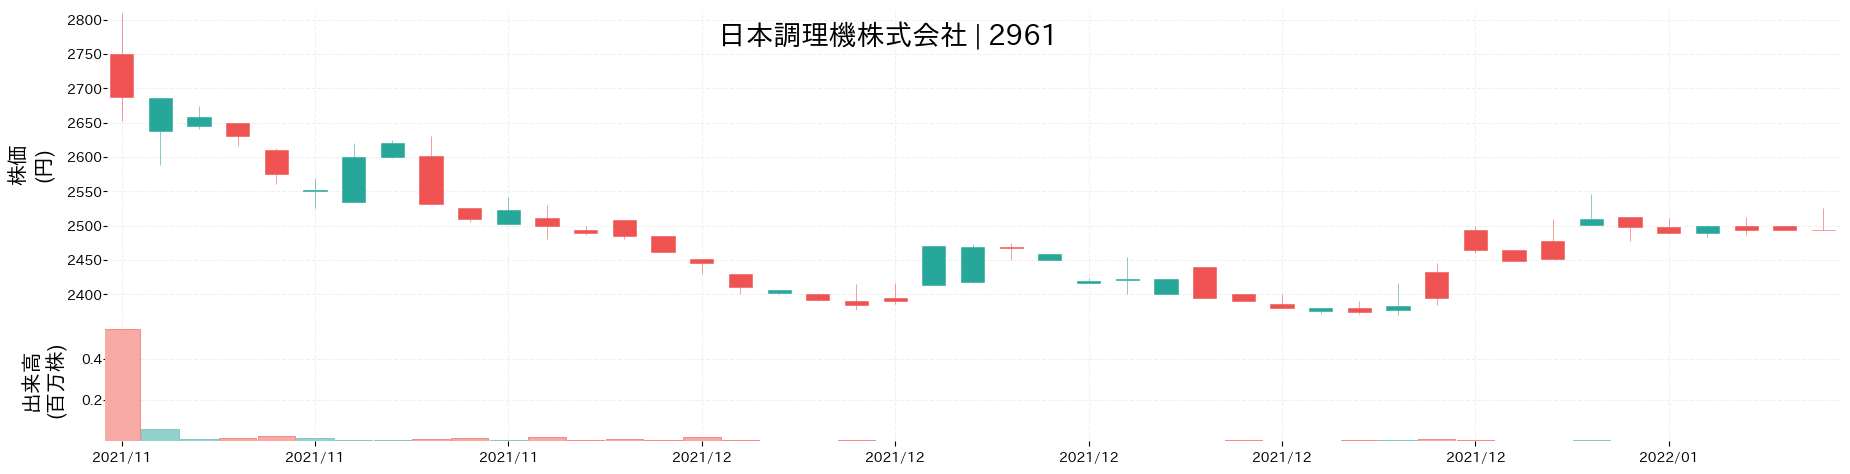 日本調理機の株価推移(2021)